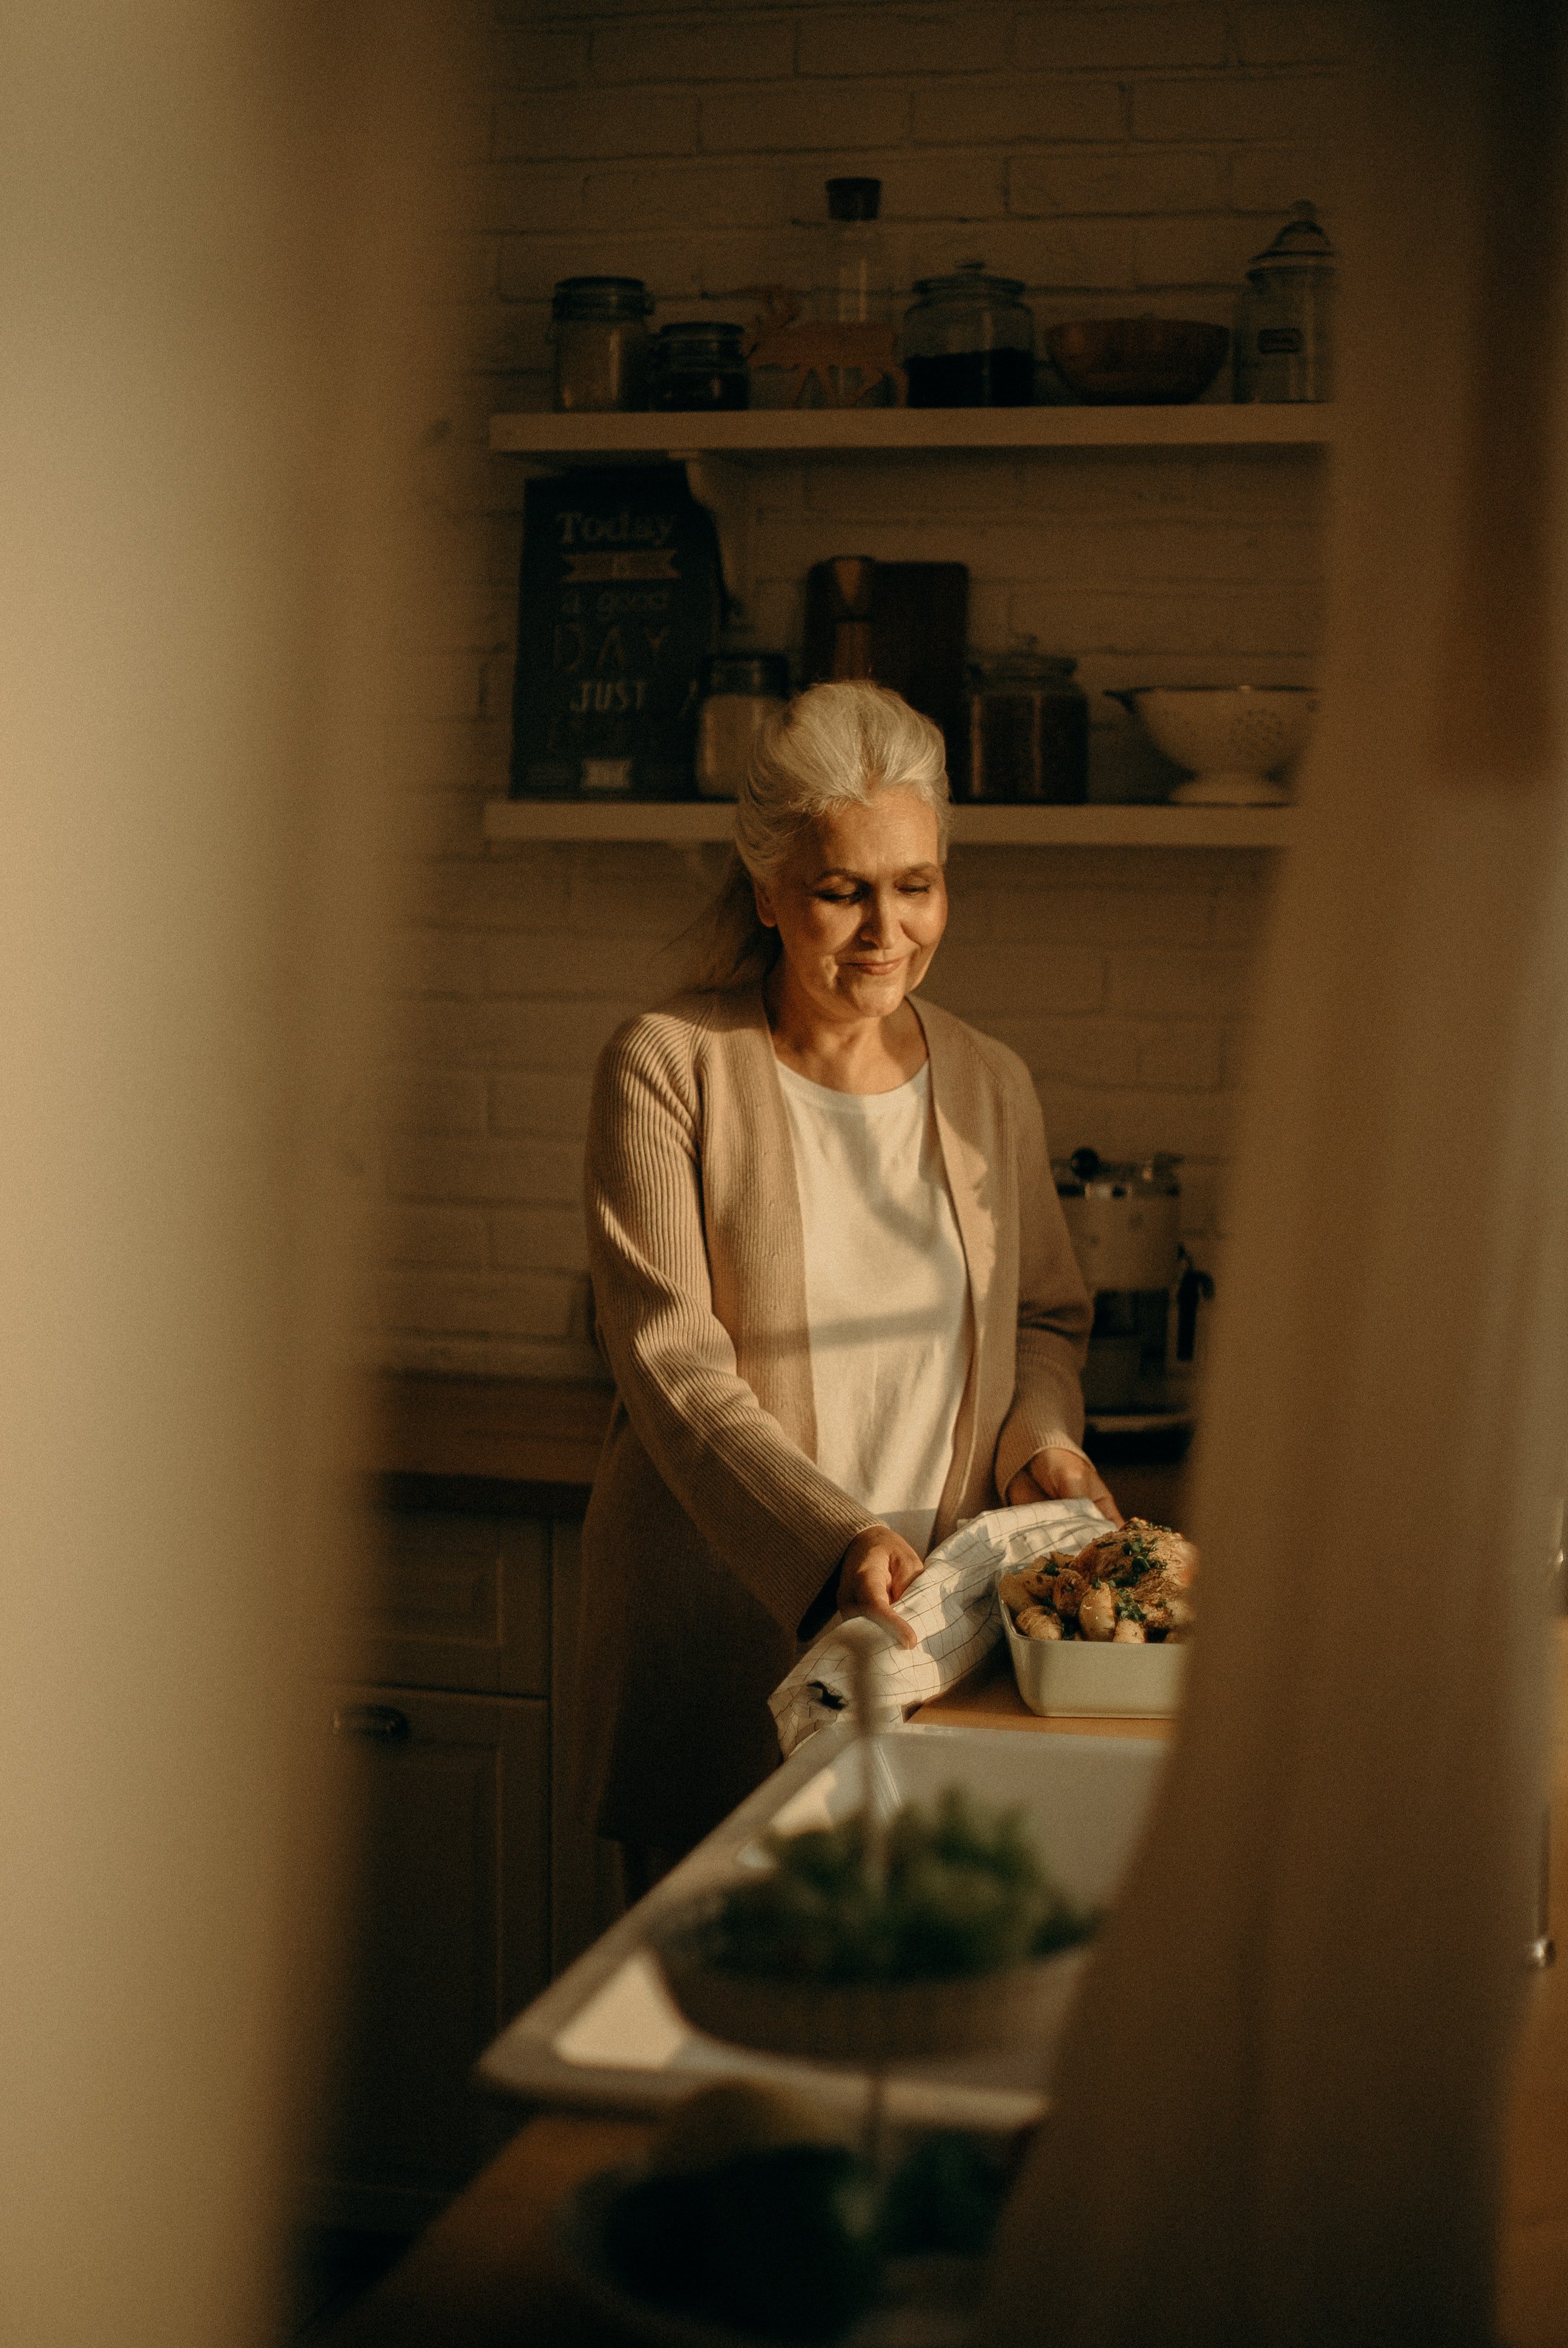 Elderly woman in the kitchen. | Source: Pexels